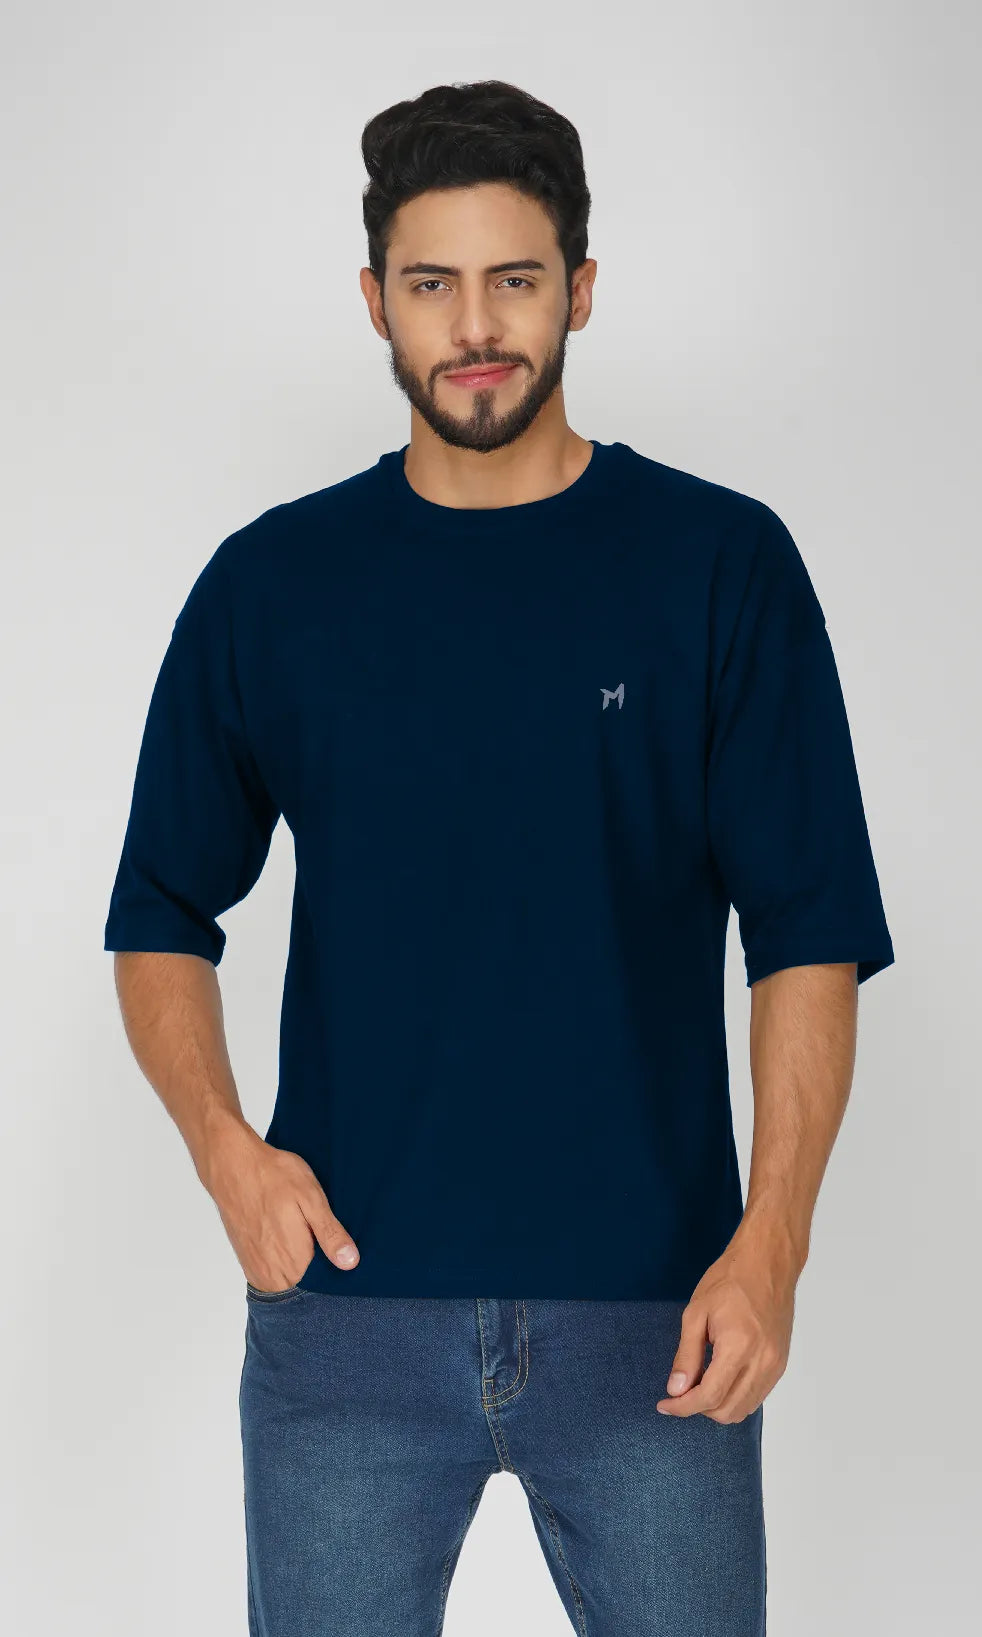 Mebadass Cotton Men's OverSized/Baggy Dropshoulder T-shirts - Navy Blue